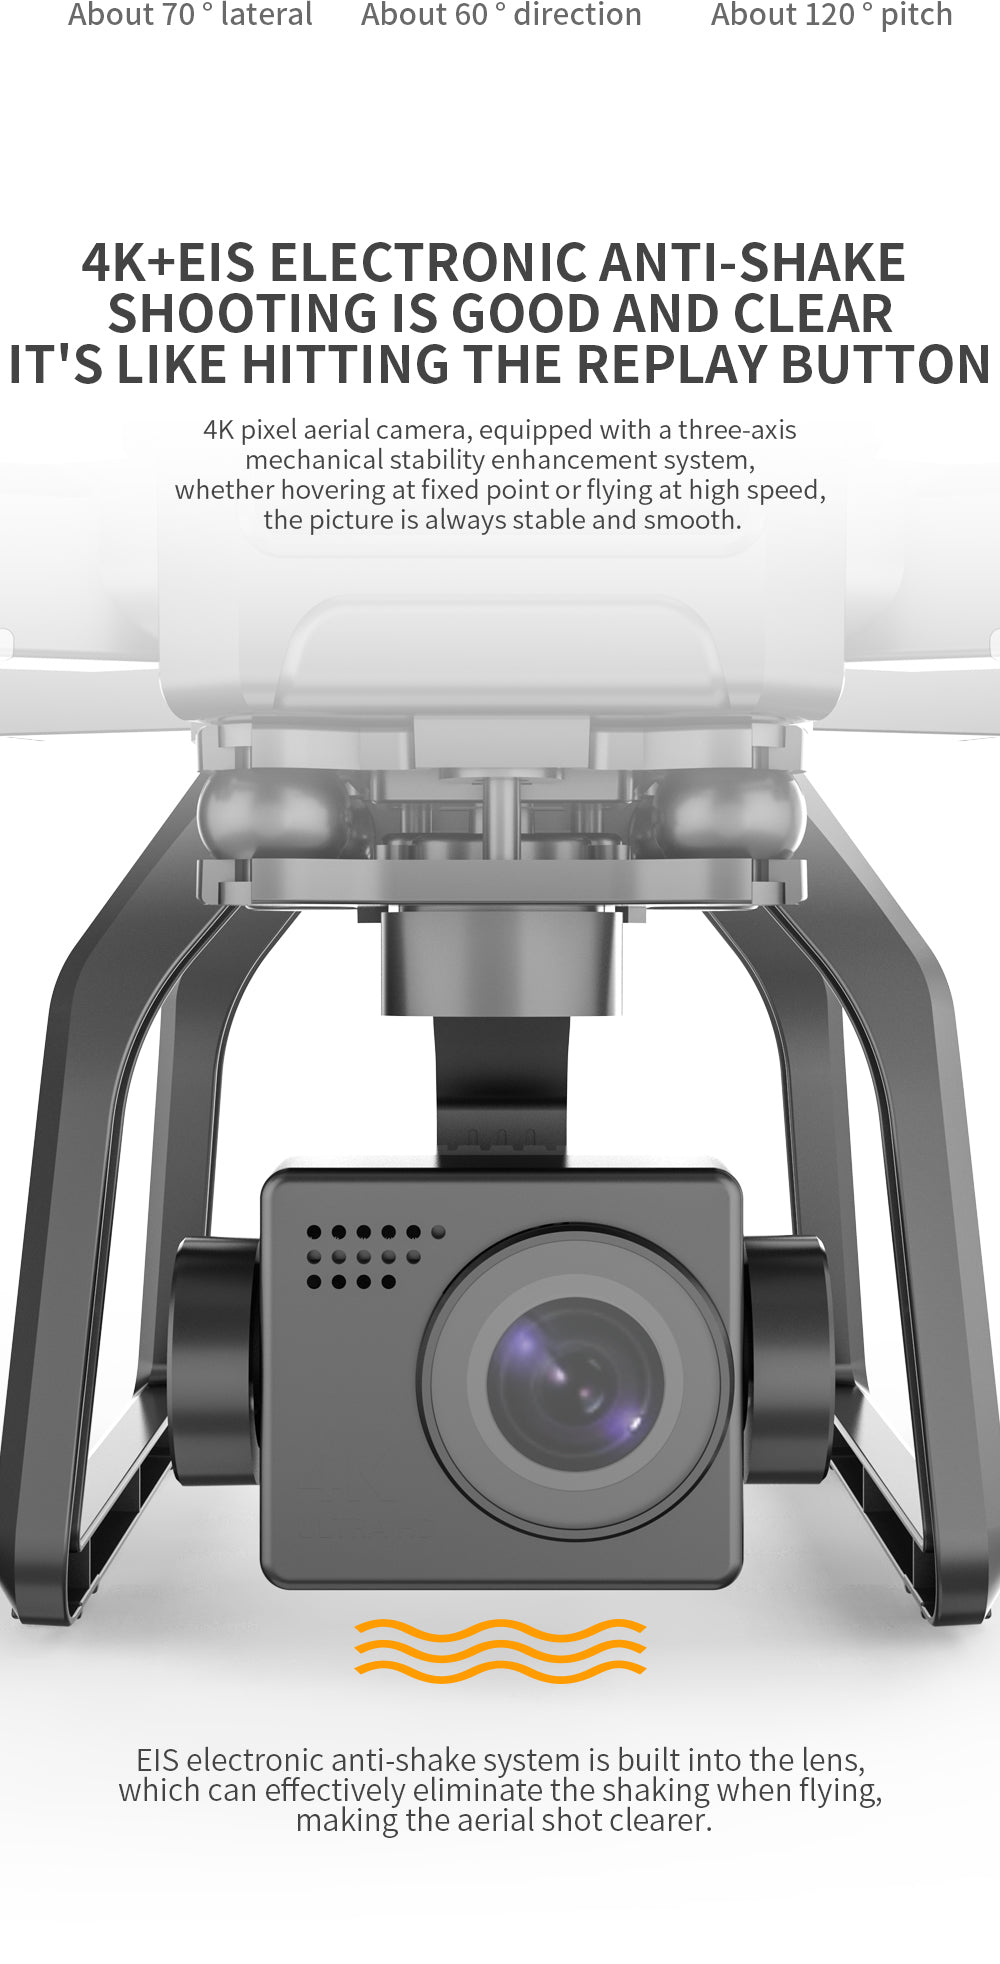 SJRC F7 PRO / F7S Pro Drone, 4K+EIS ELECTRONIC ANTI-SHAKE SHOOTING